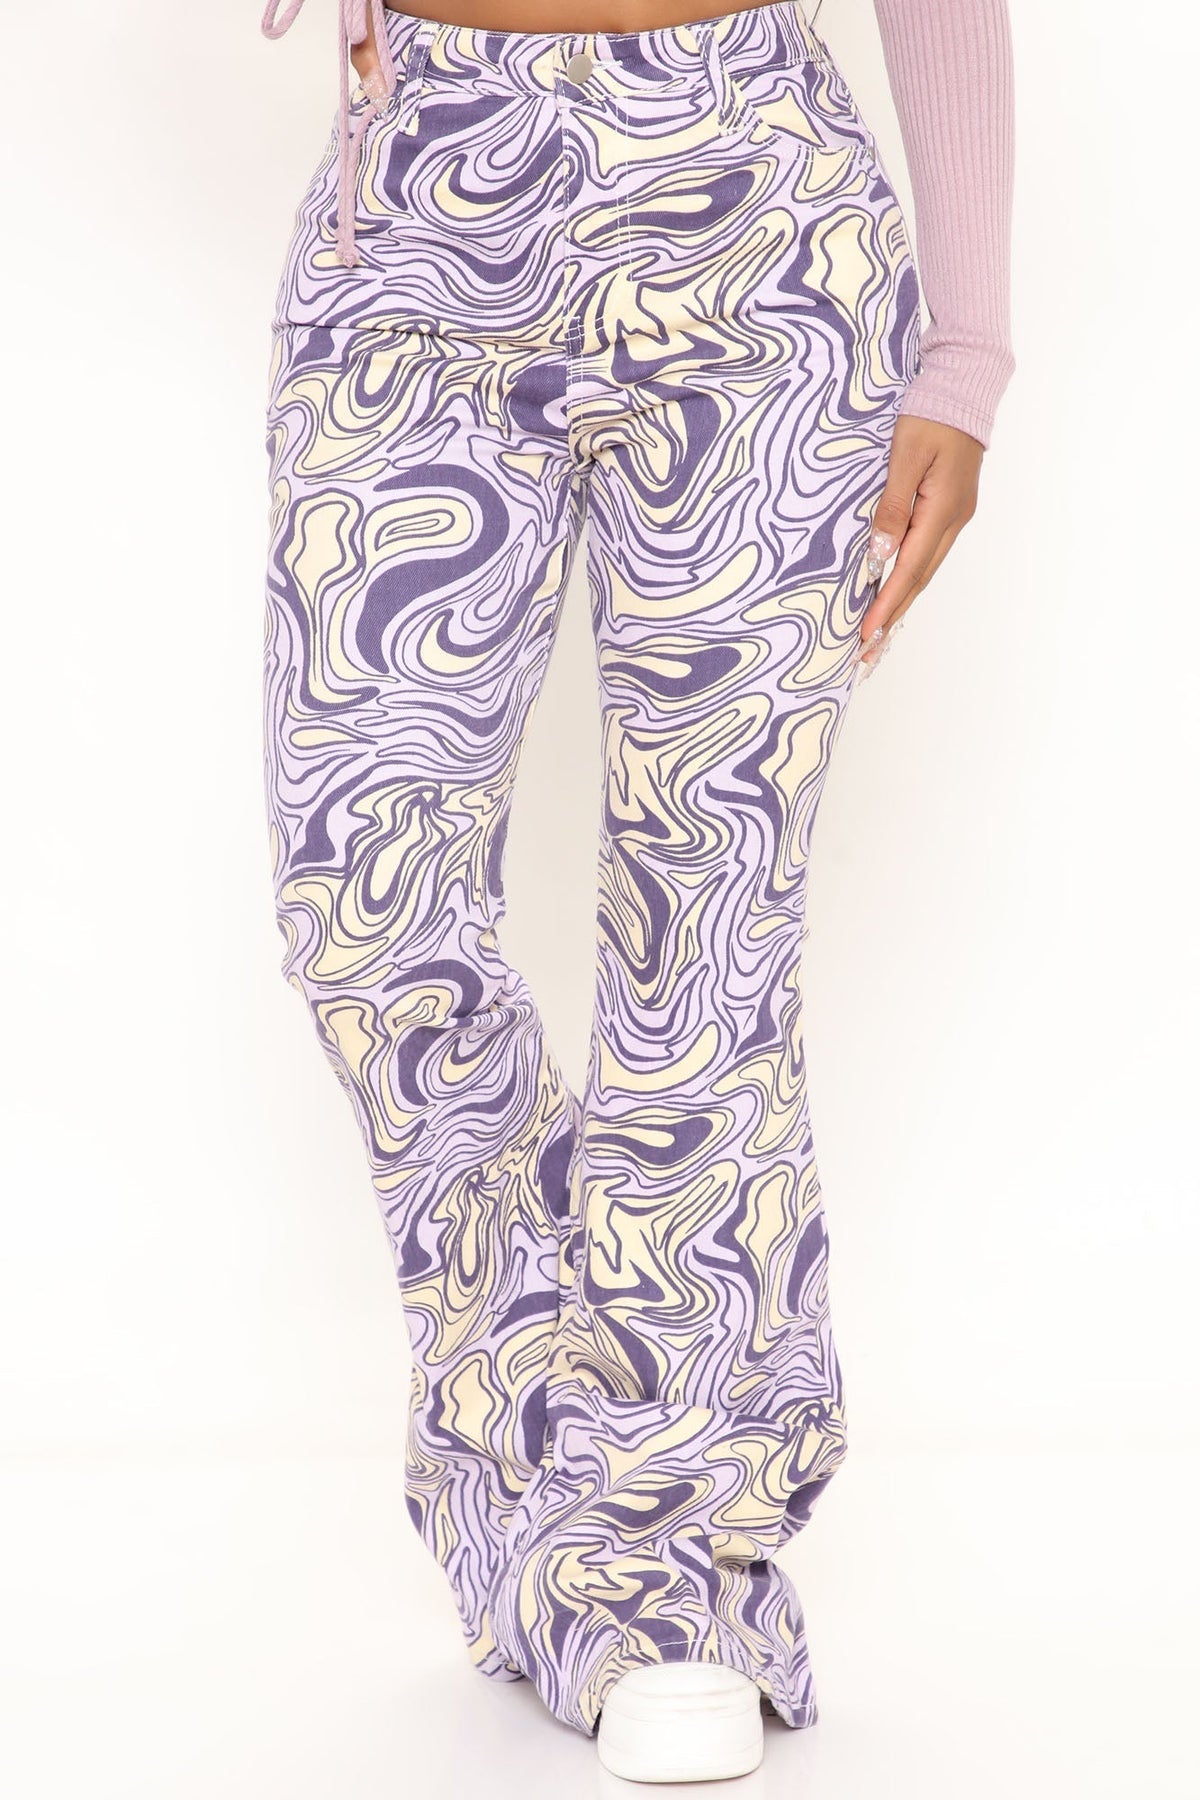 Too Groovy Swirl Print Flare Jeans - Purple/combo